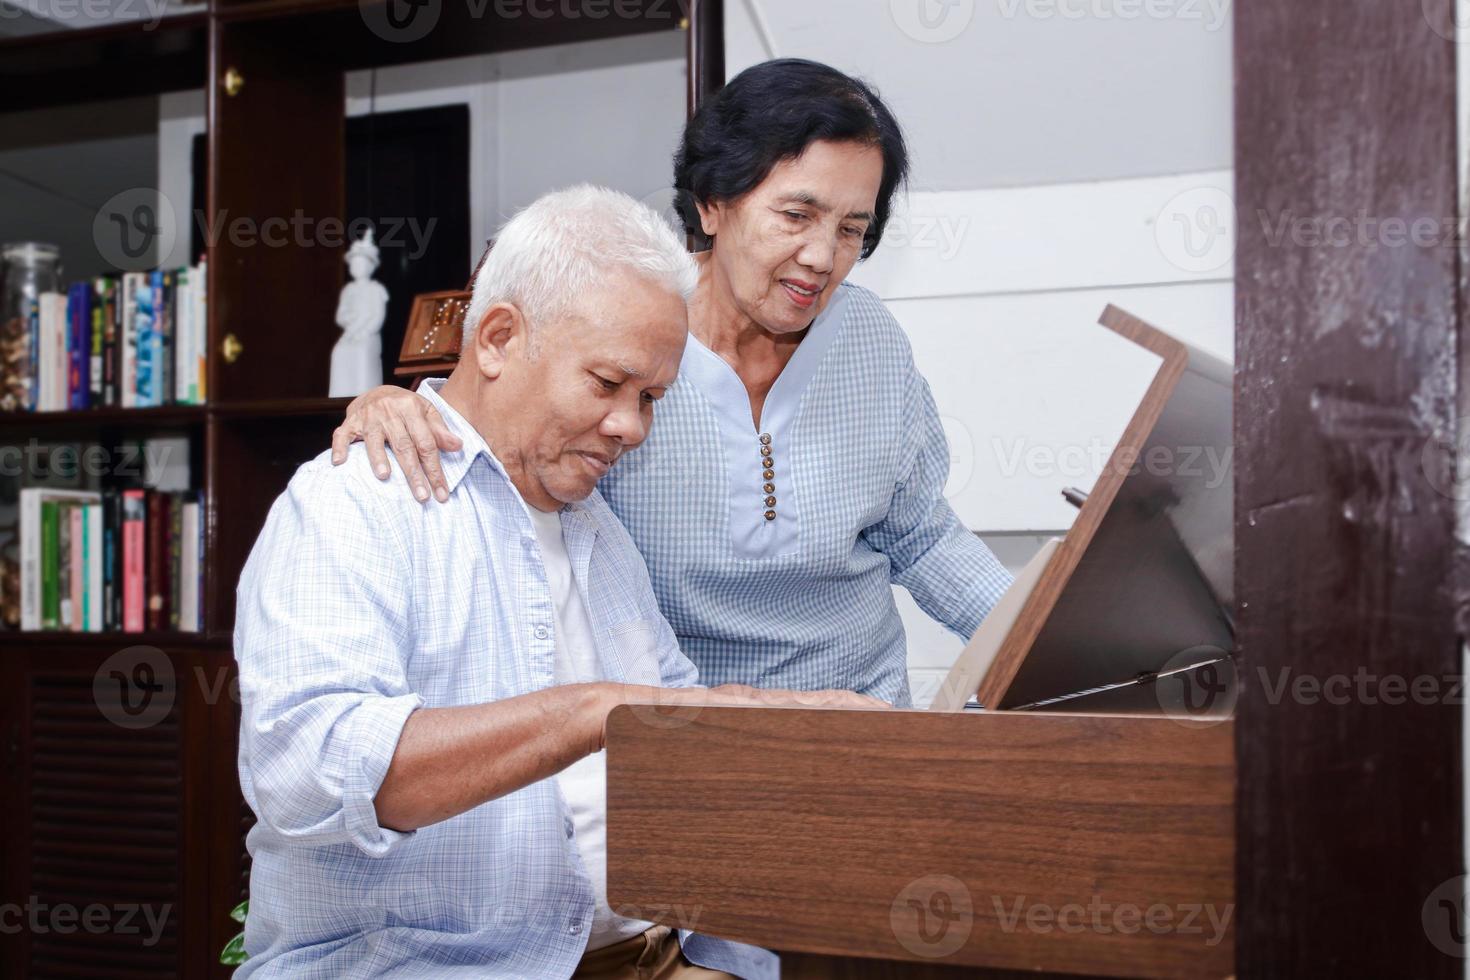 casal de idosos asiáticos se diverte tocando piano elétrico juntos. conceito de comunidade sênior, cuidados de saúde foto